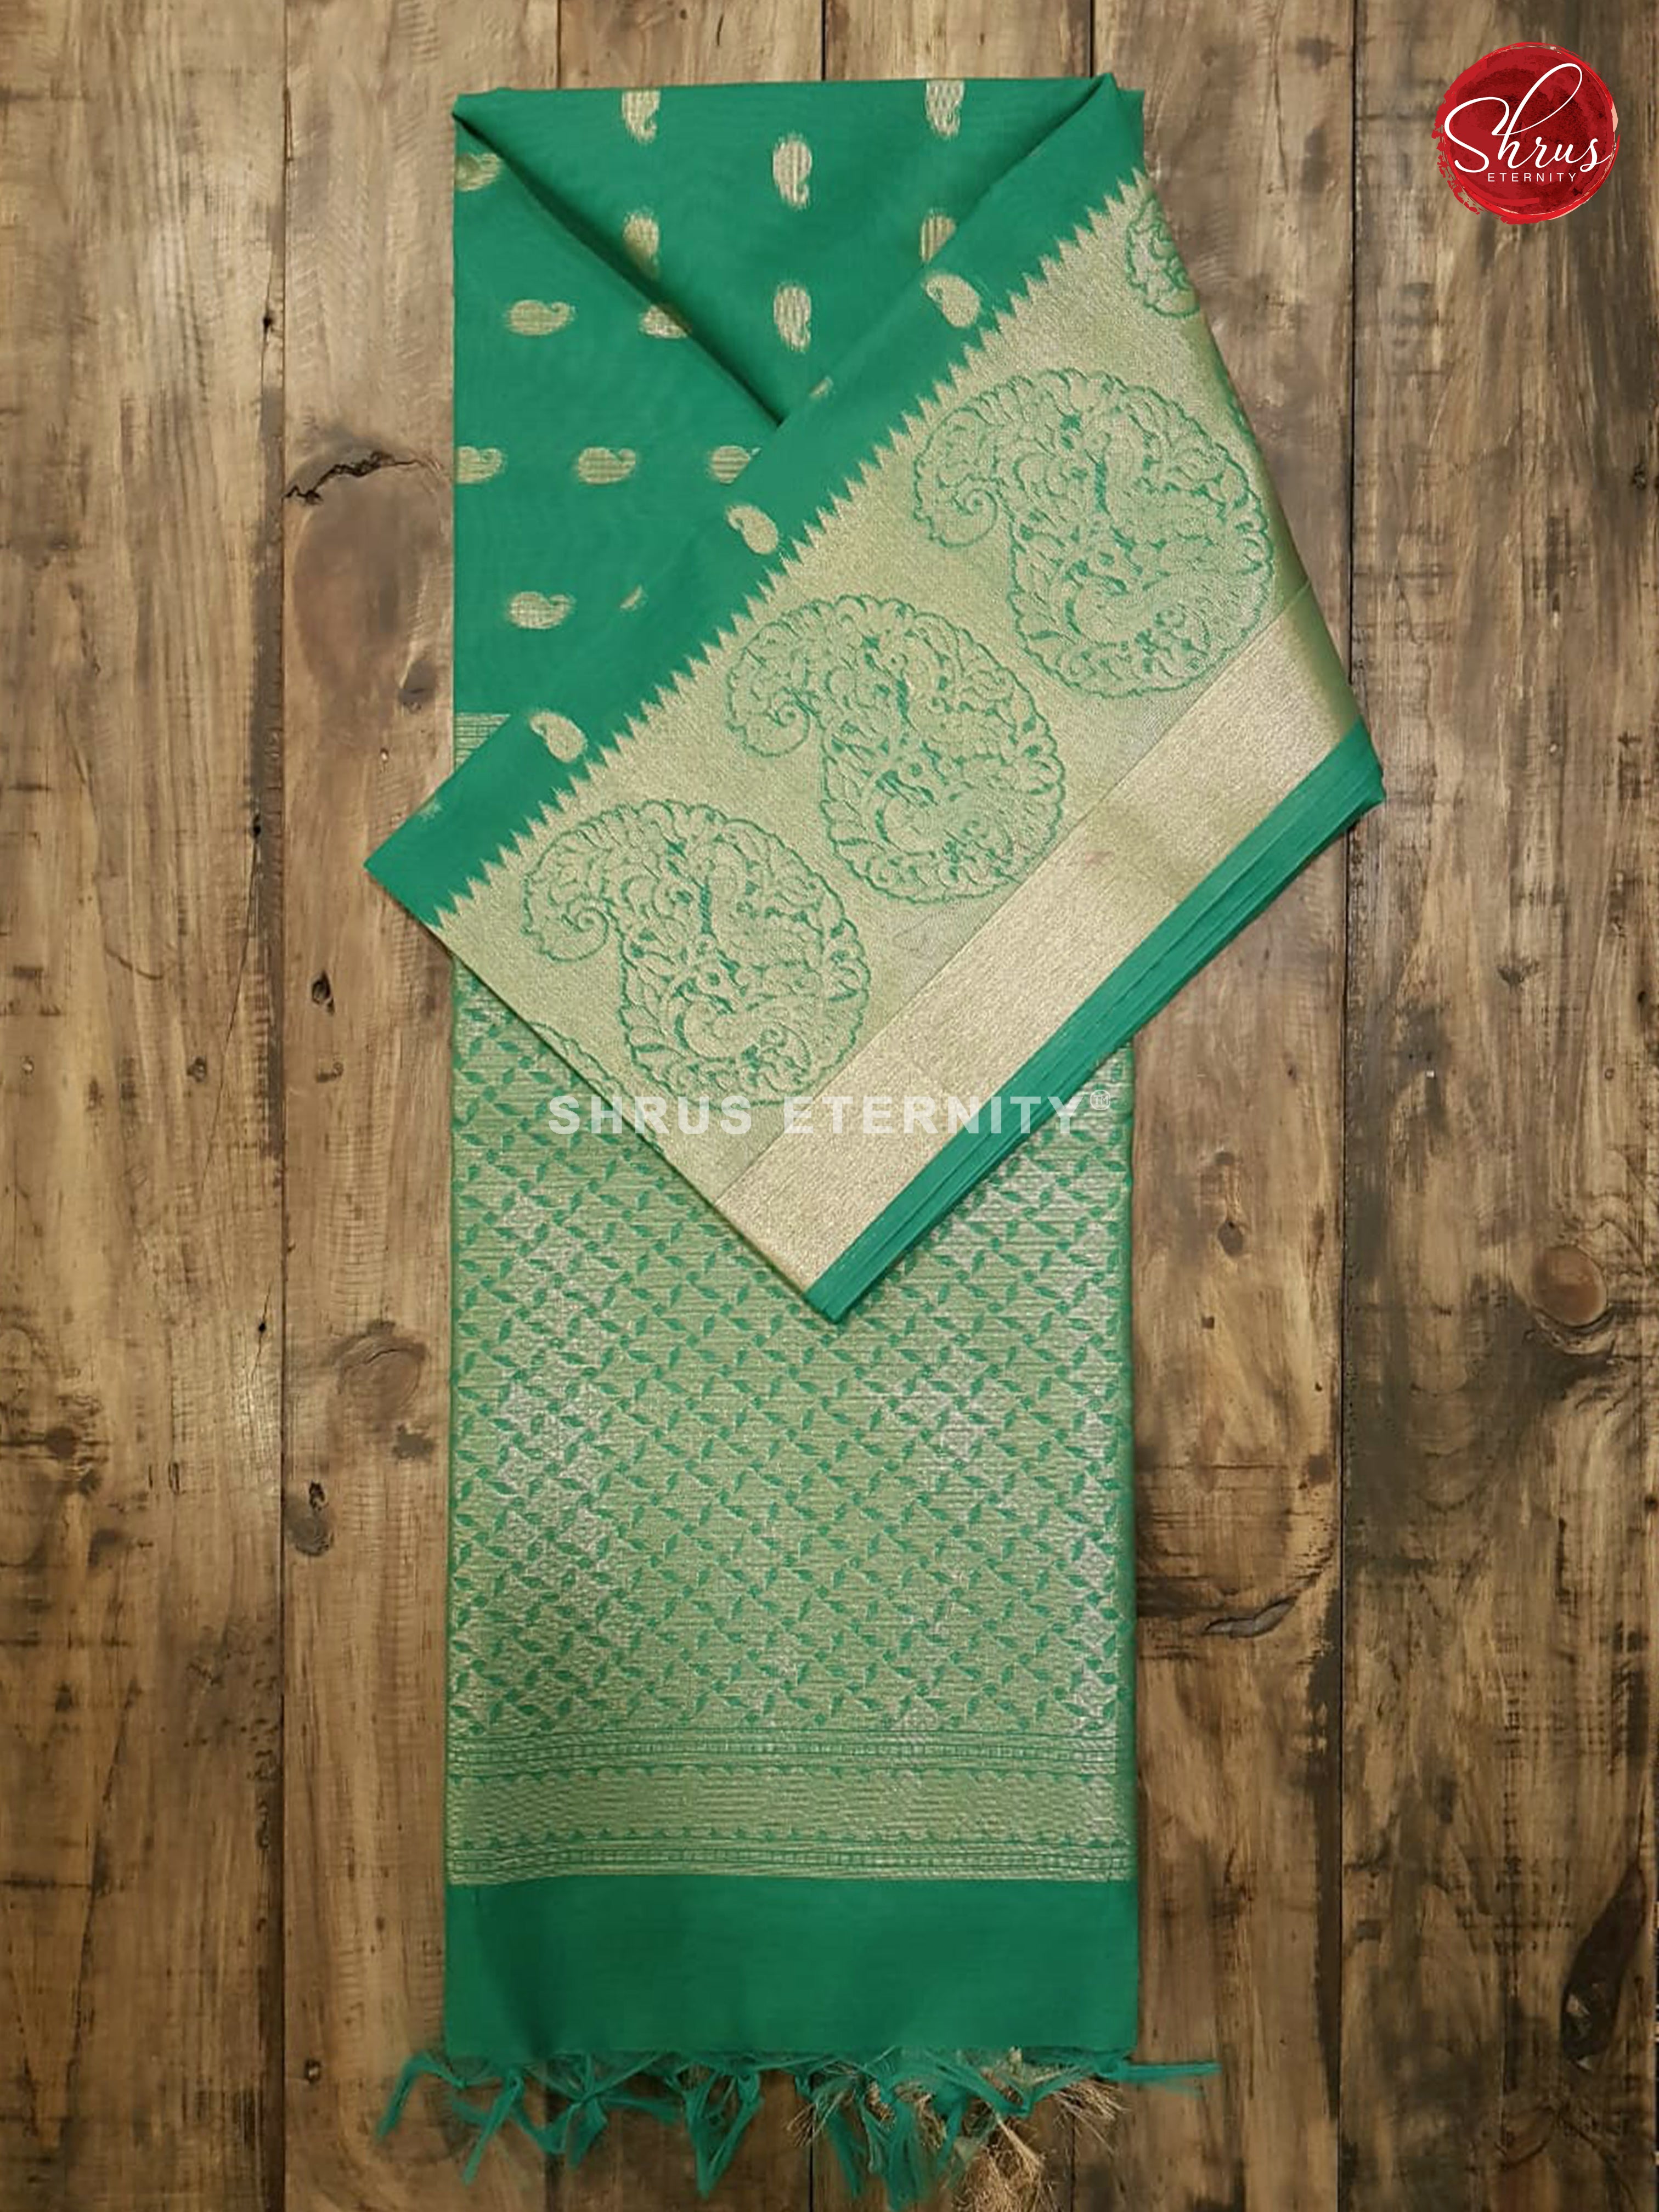 Green(Single Tone) - Kora Cotton Silk - Shop on ShrusEternity.com